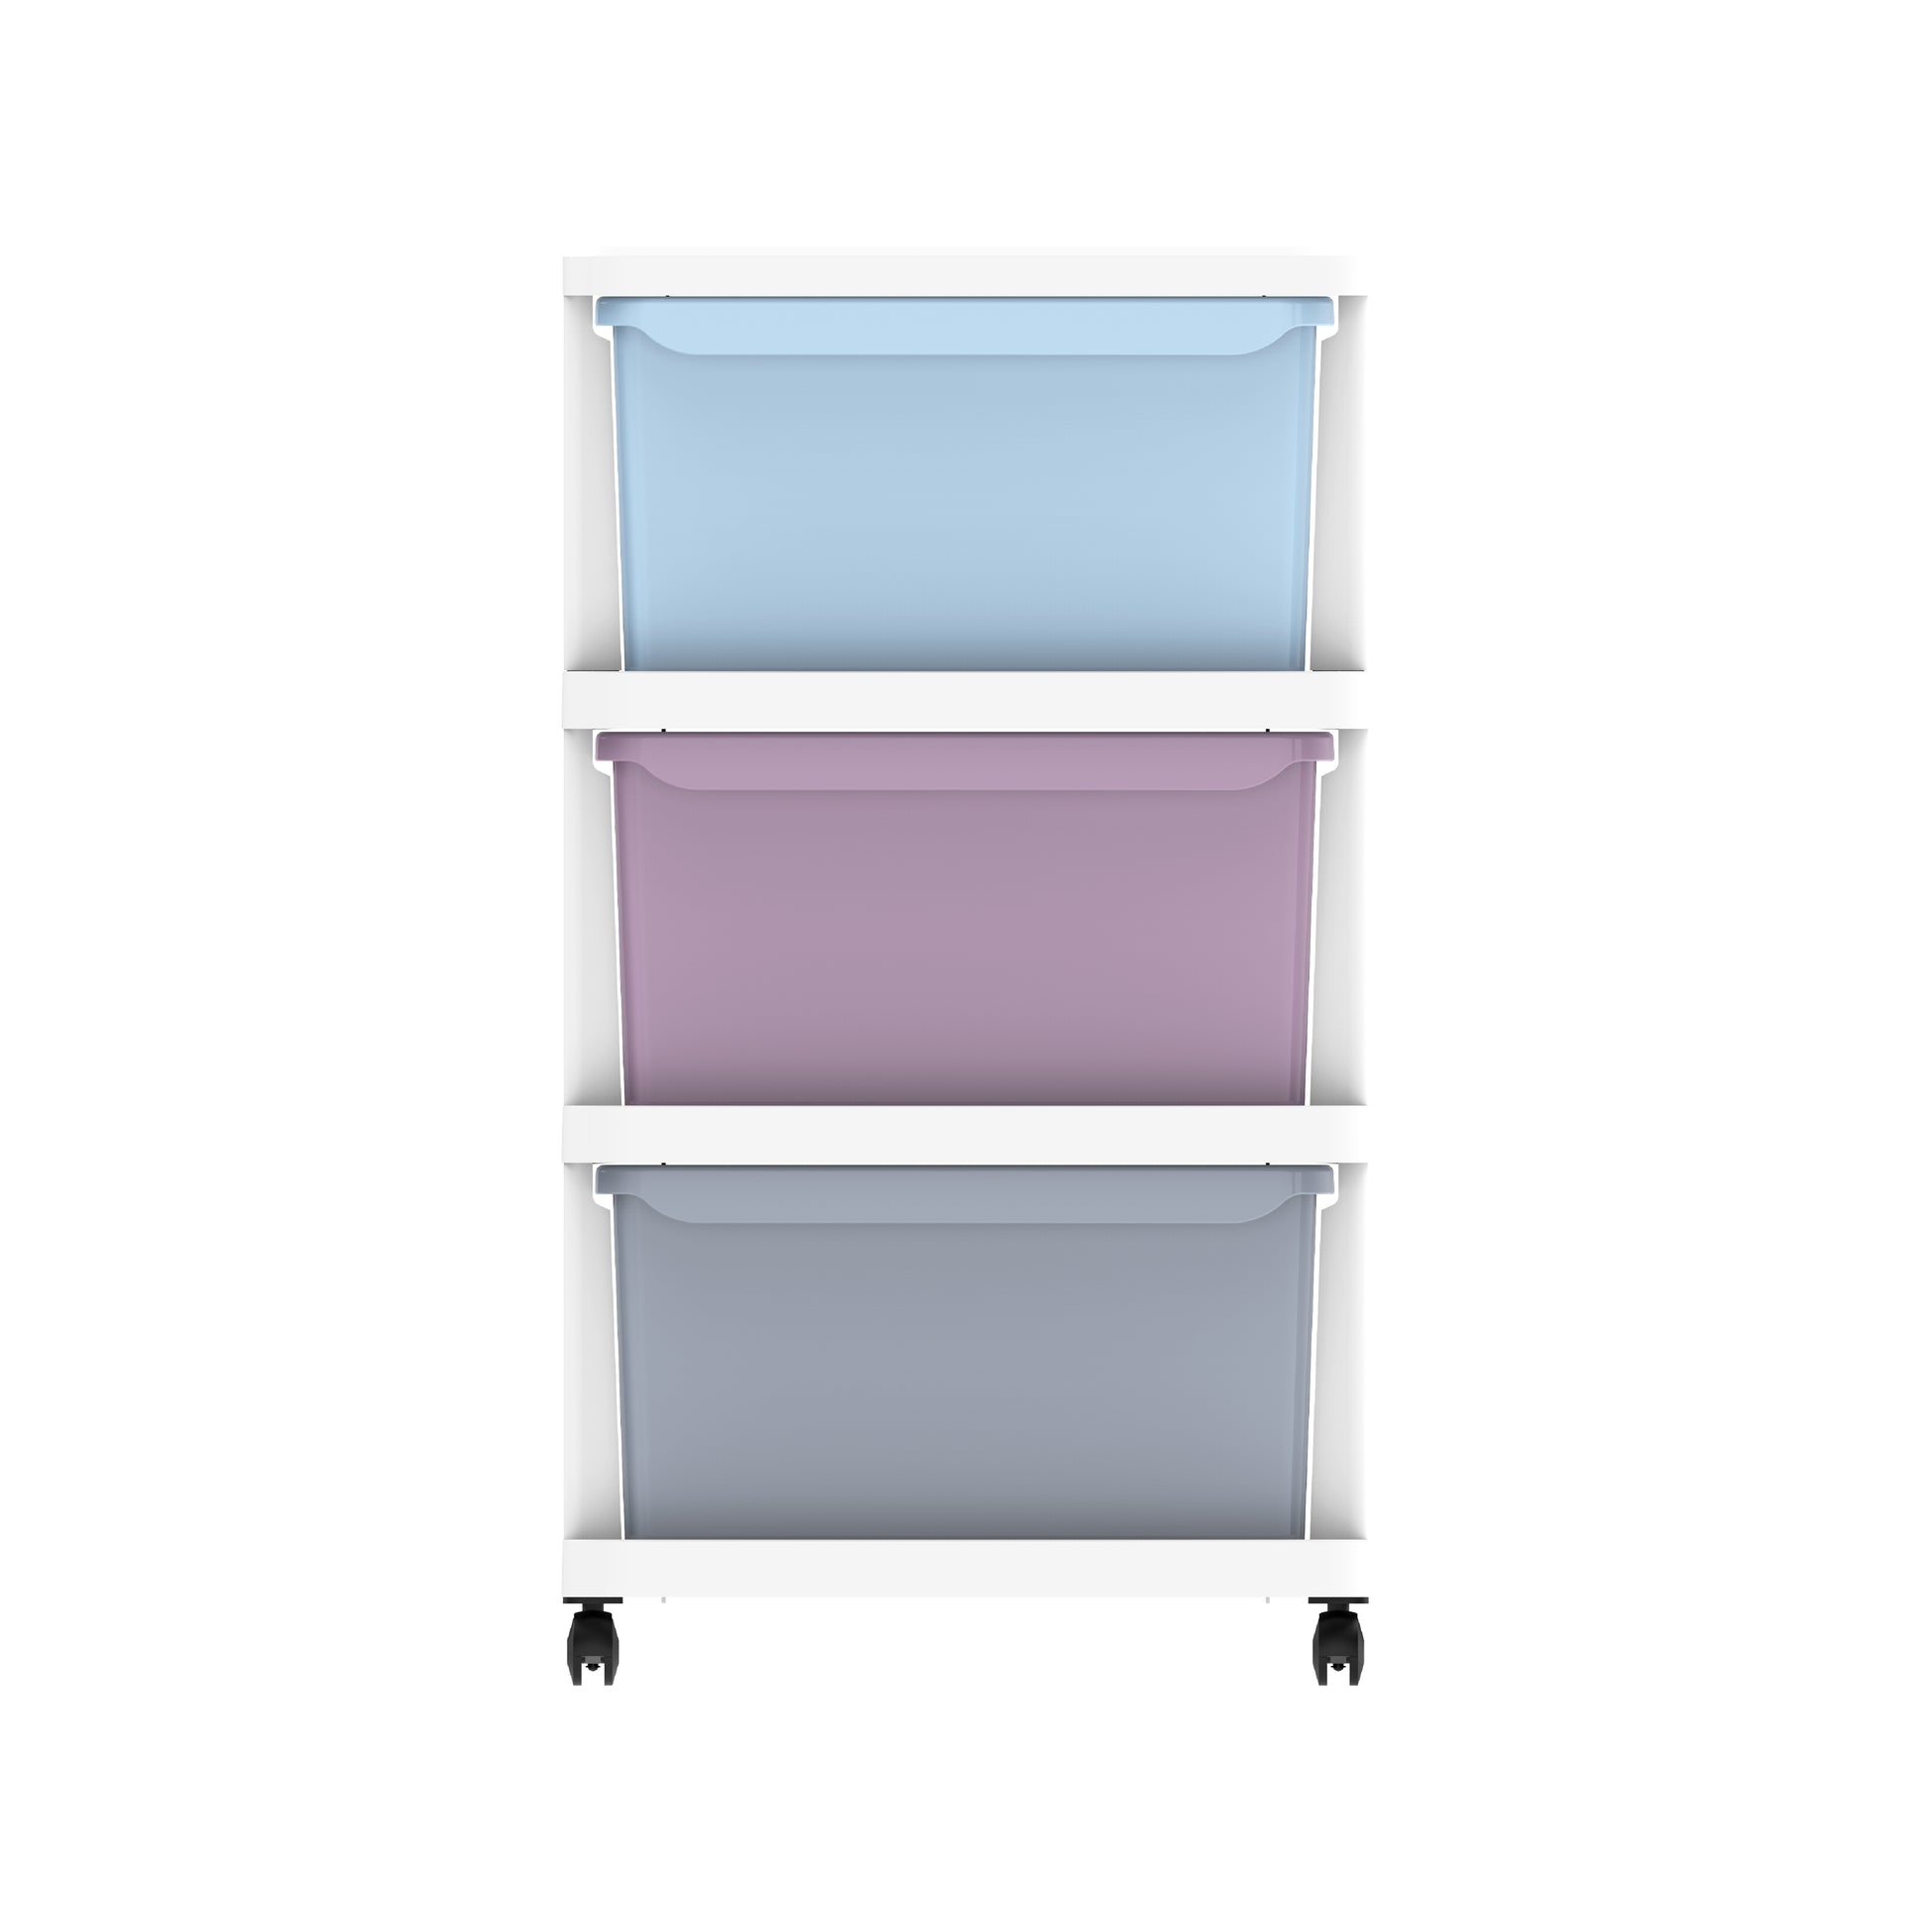 Cosmoplast Disney Frozen Multipurpose Storage Cabinet 3 with Wheels